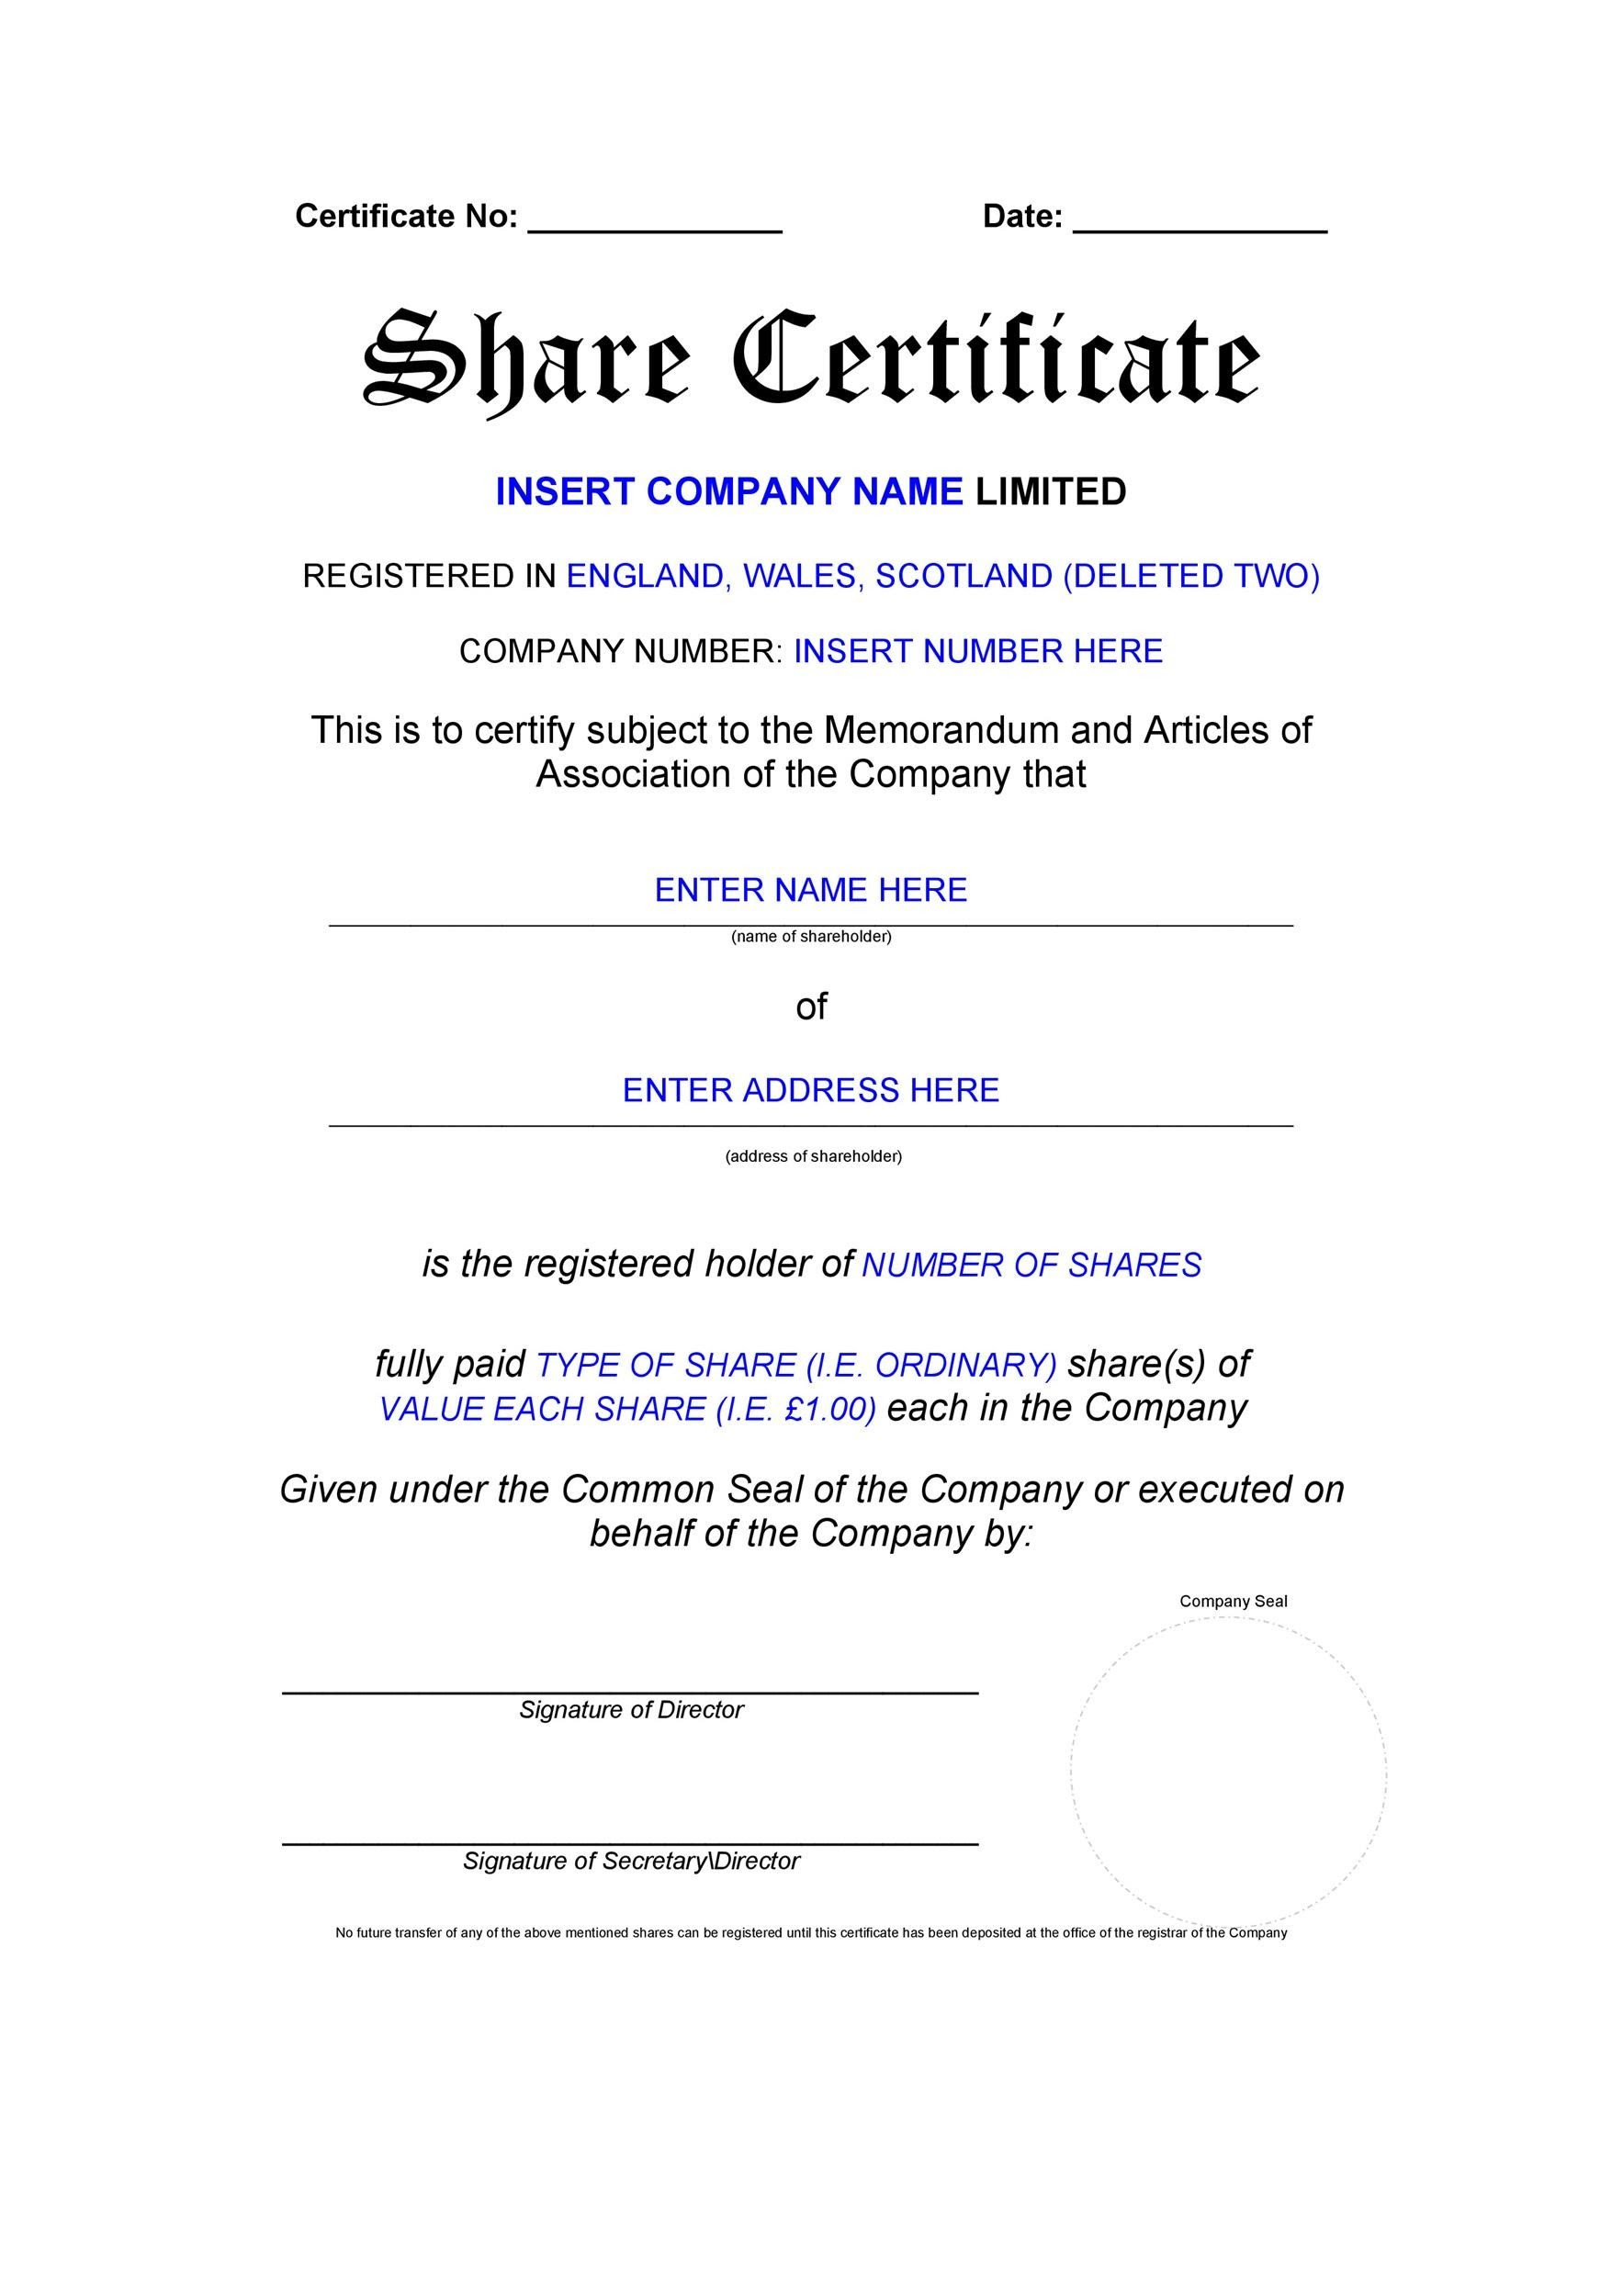 Share Certificate Template Cipc - Captions Lovers With Regard To Shareholding Certificate Template